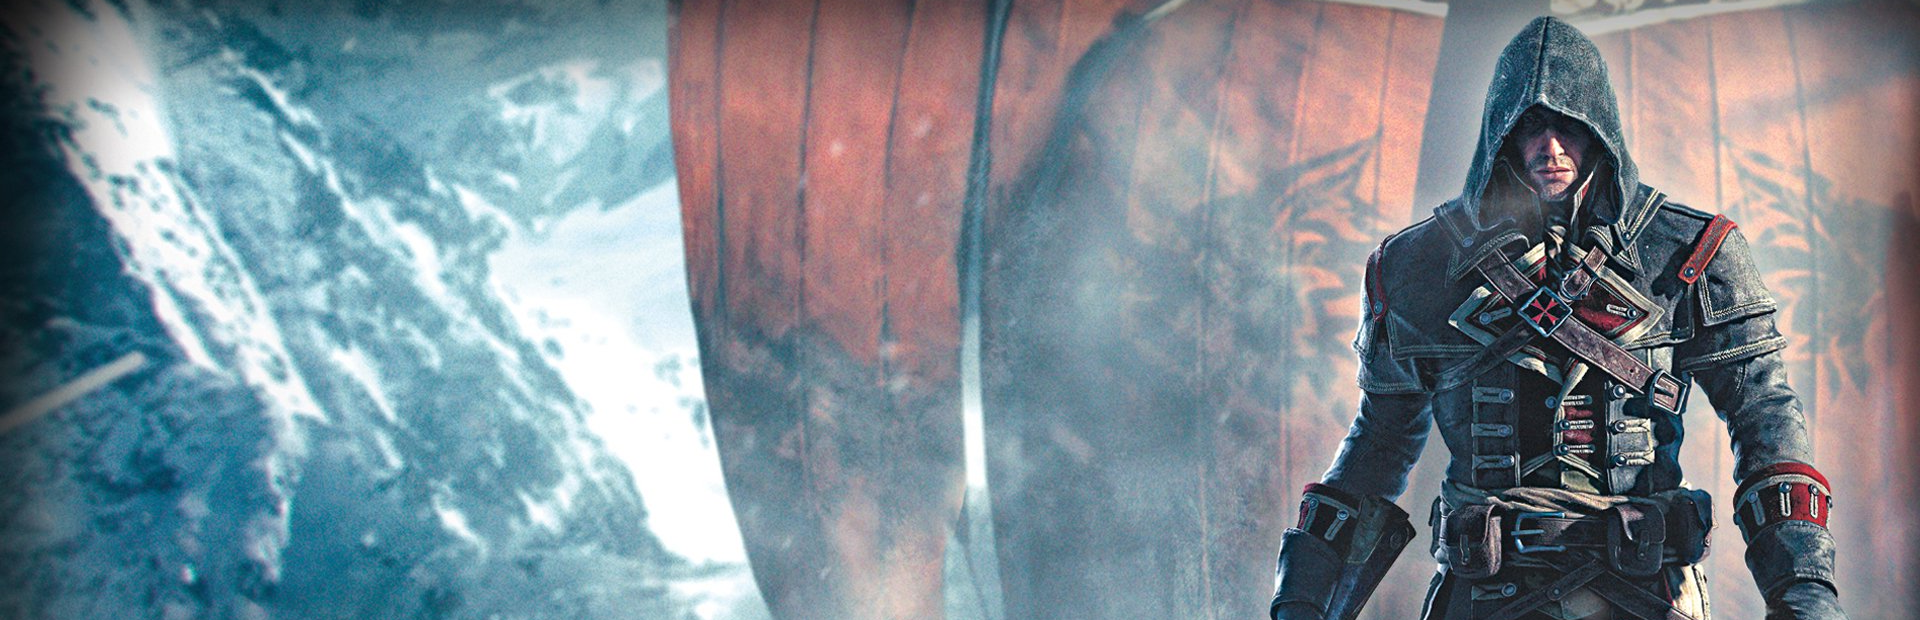 Игра ассасин крид механики. Шэй Патрик Кормак арт. AC Rogue Шей Кормак костюмы. Костюм исследователя Арктики ассасин Роуг. Assassins Creed III обложка Steam.